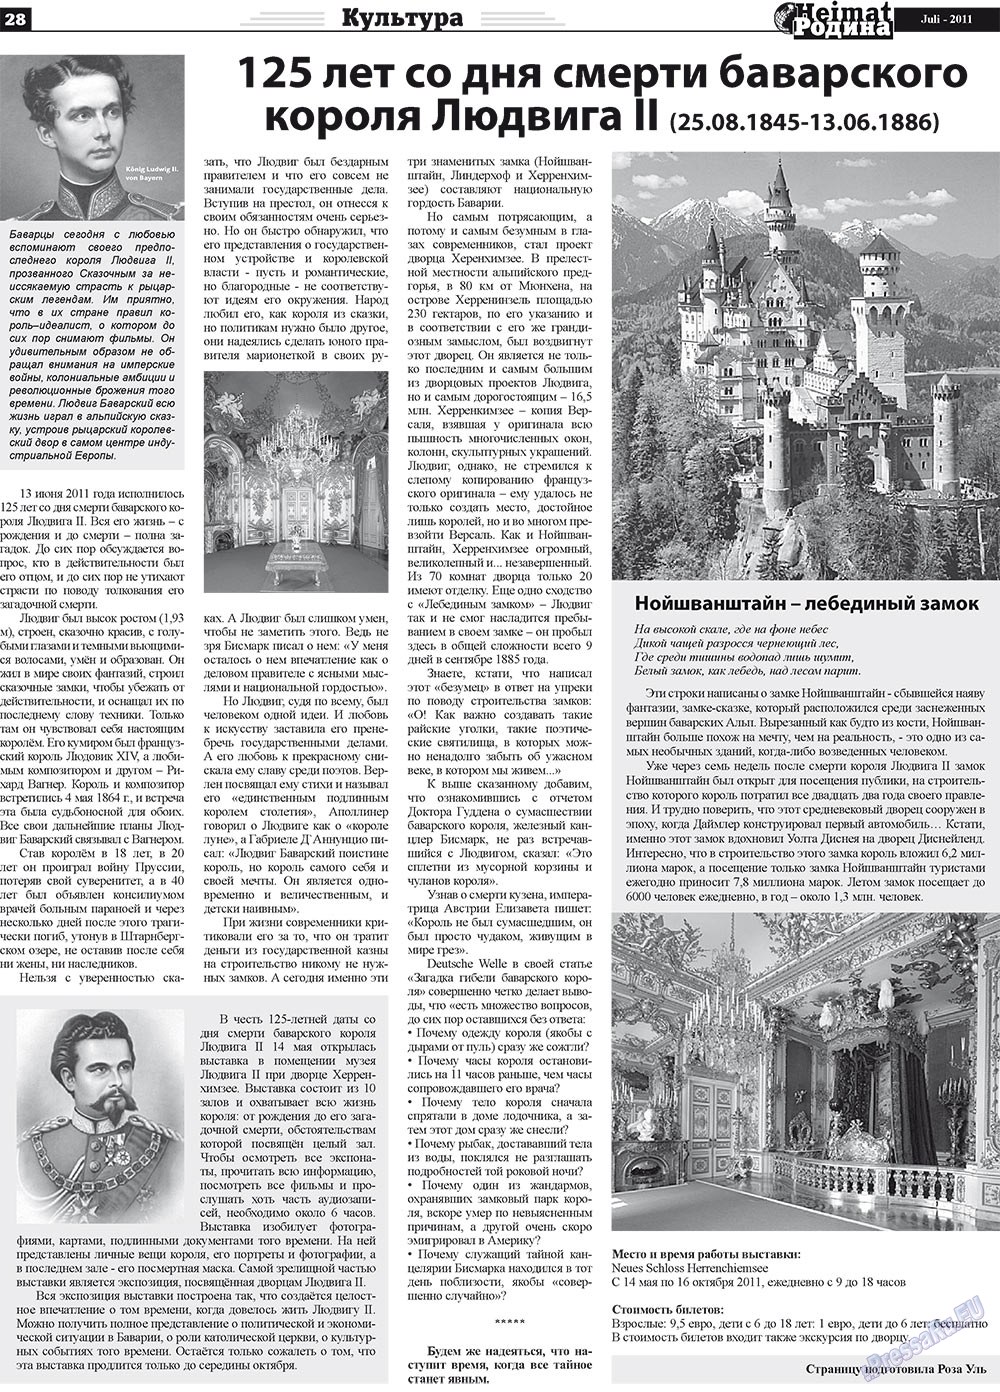 Heimat-Родина, газета. 2011 №7 стр.28